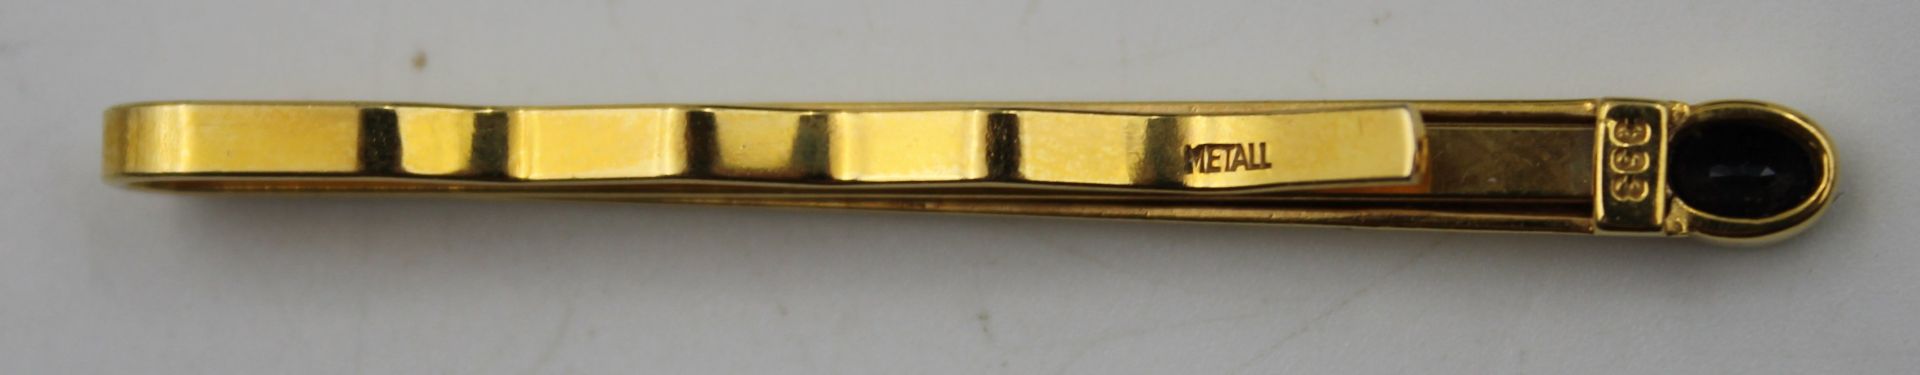 Kravattennadel, GG 333, Brillant und Safir, Klammer Metall, L-6cm. - Image 2 of 4